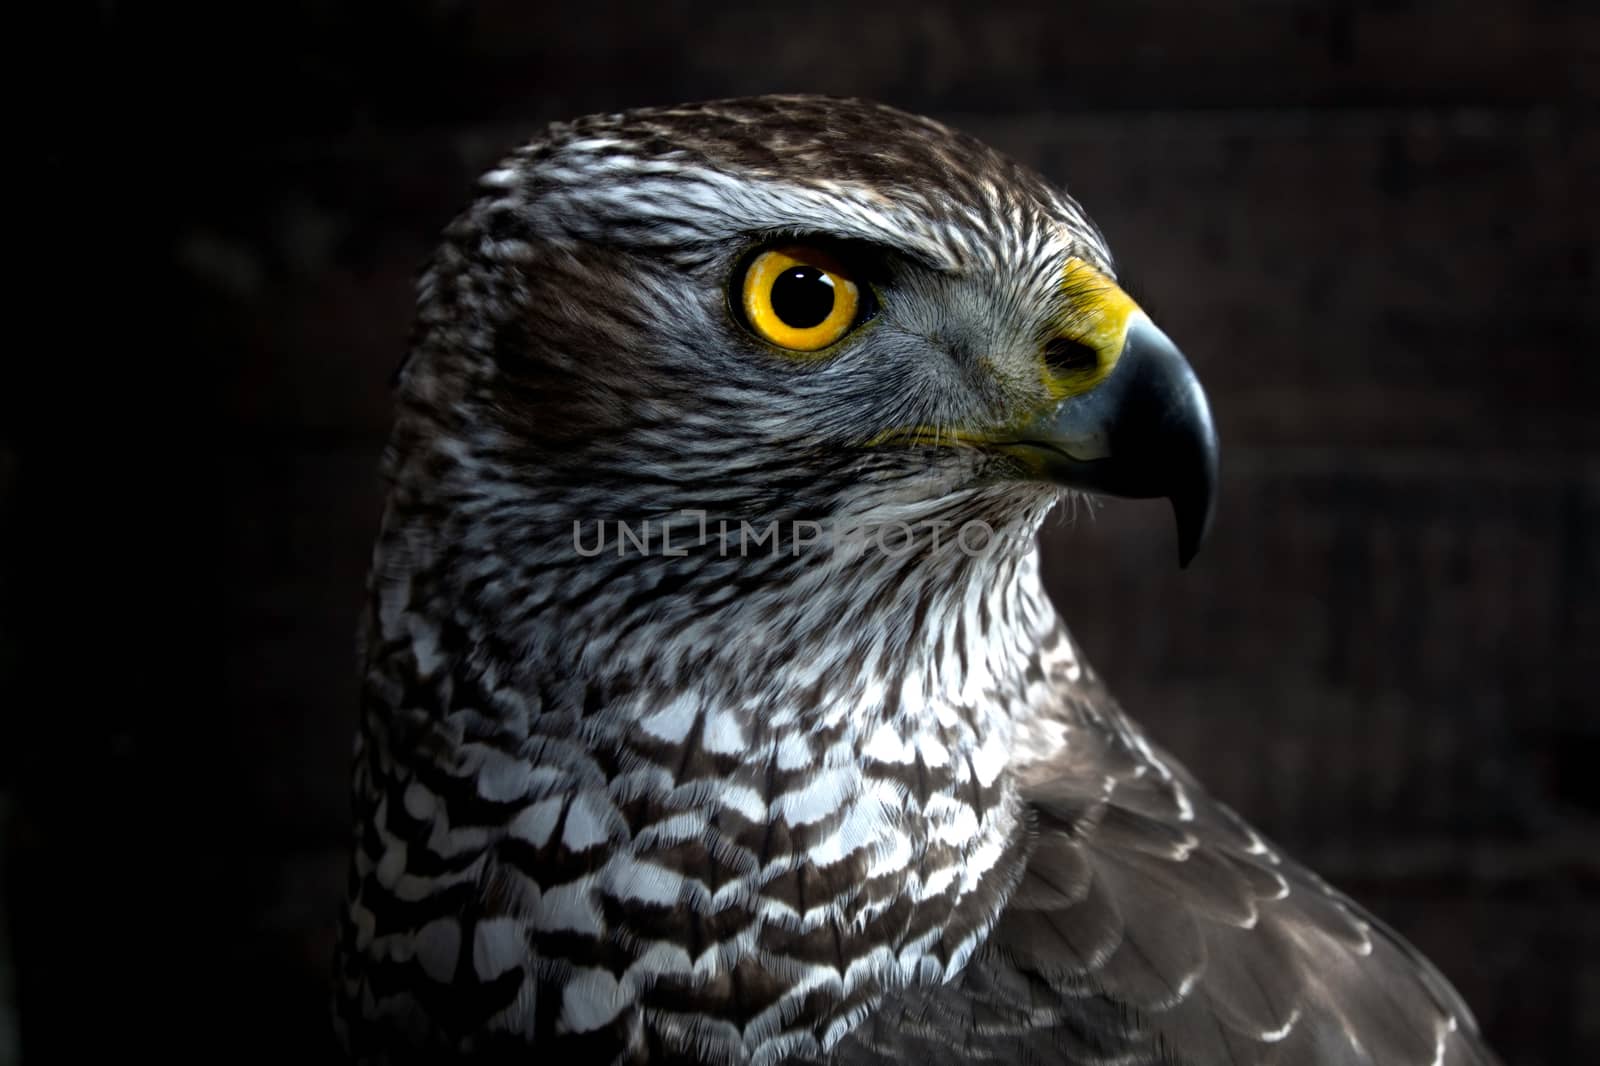 Hawk close up. Bird of prey portrait. Wild animal.